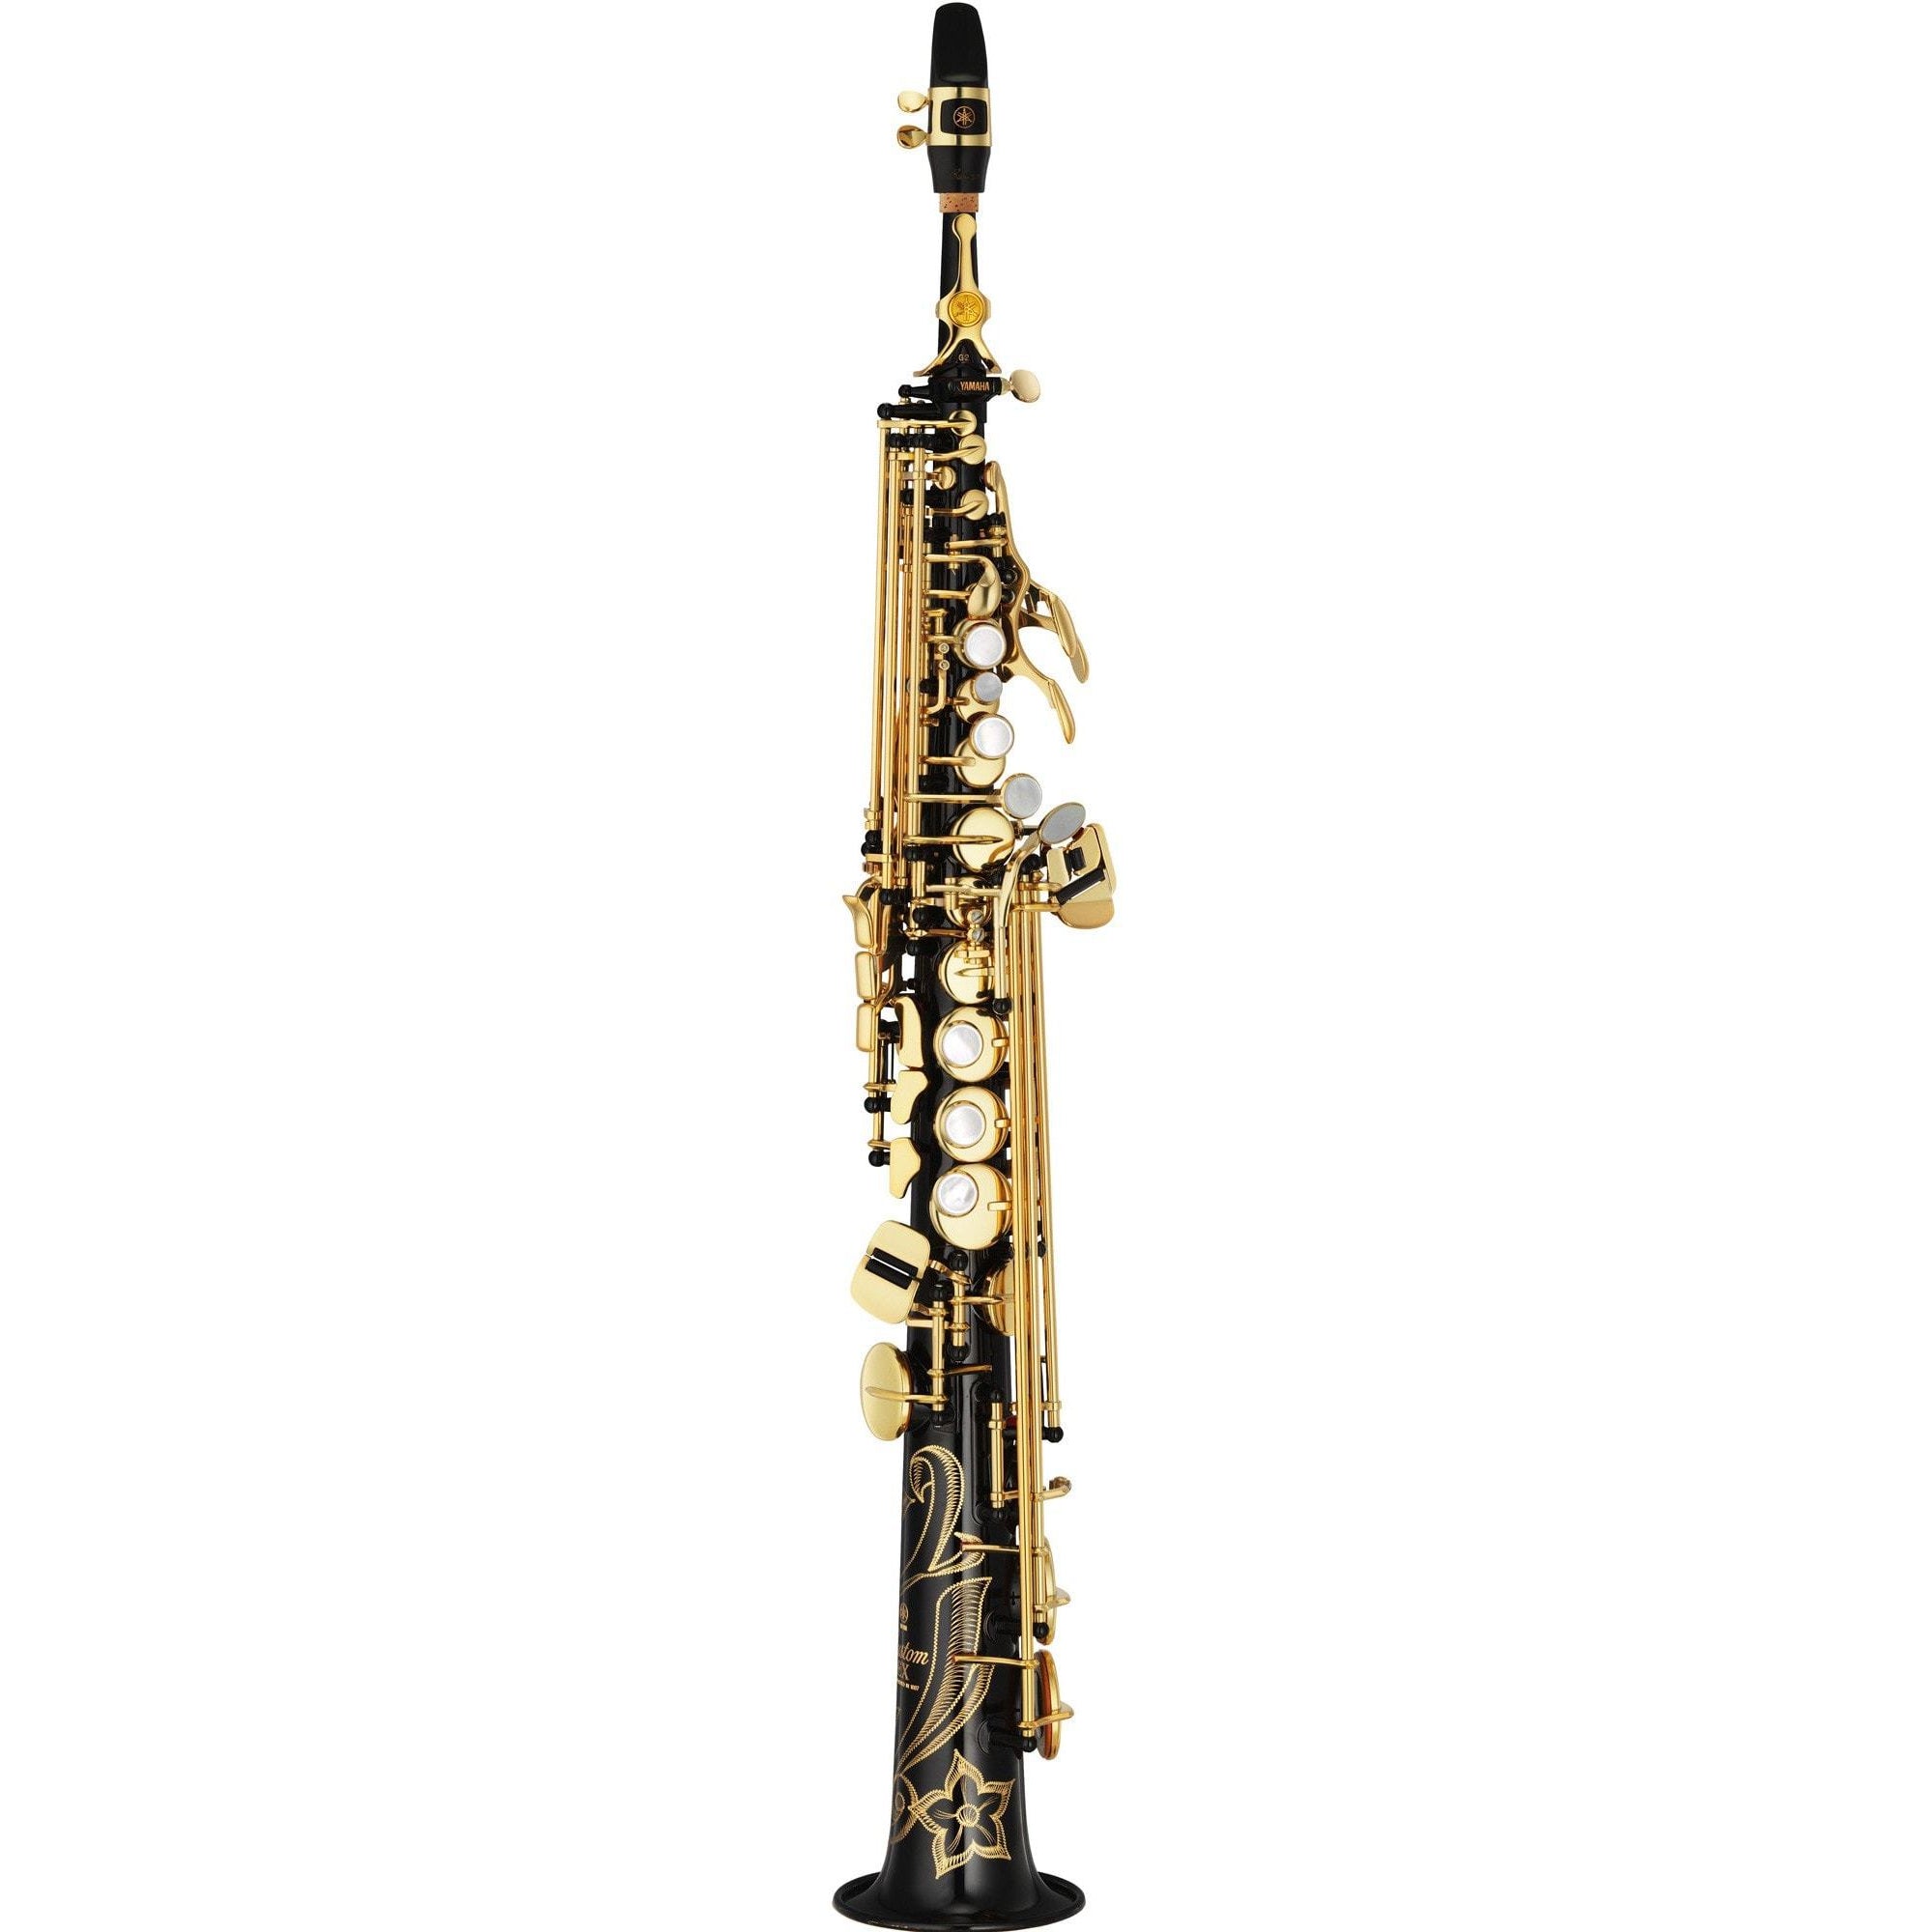 Yamaha YSS-875EXHG Soprano Saxophone YSS-875EXHGB - Black Lacquered